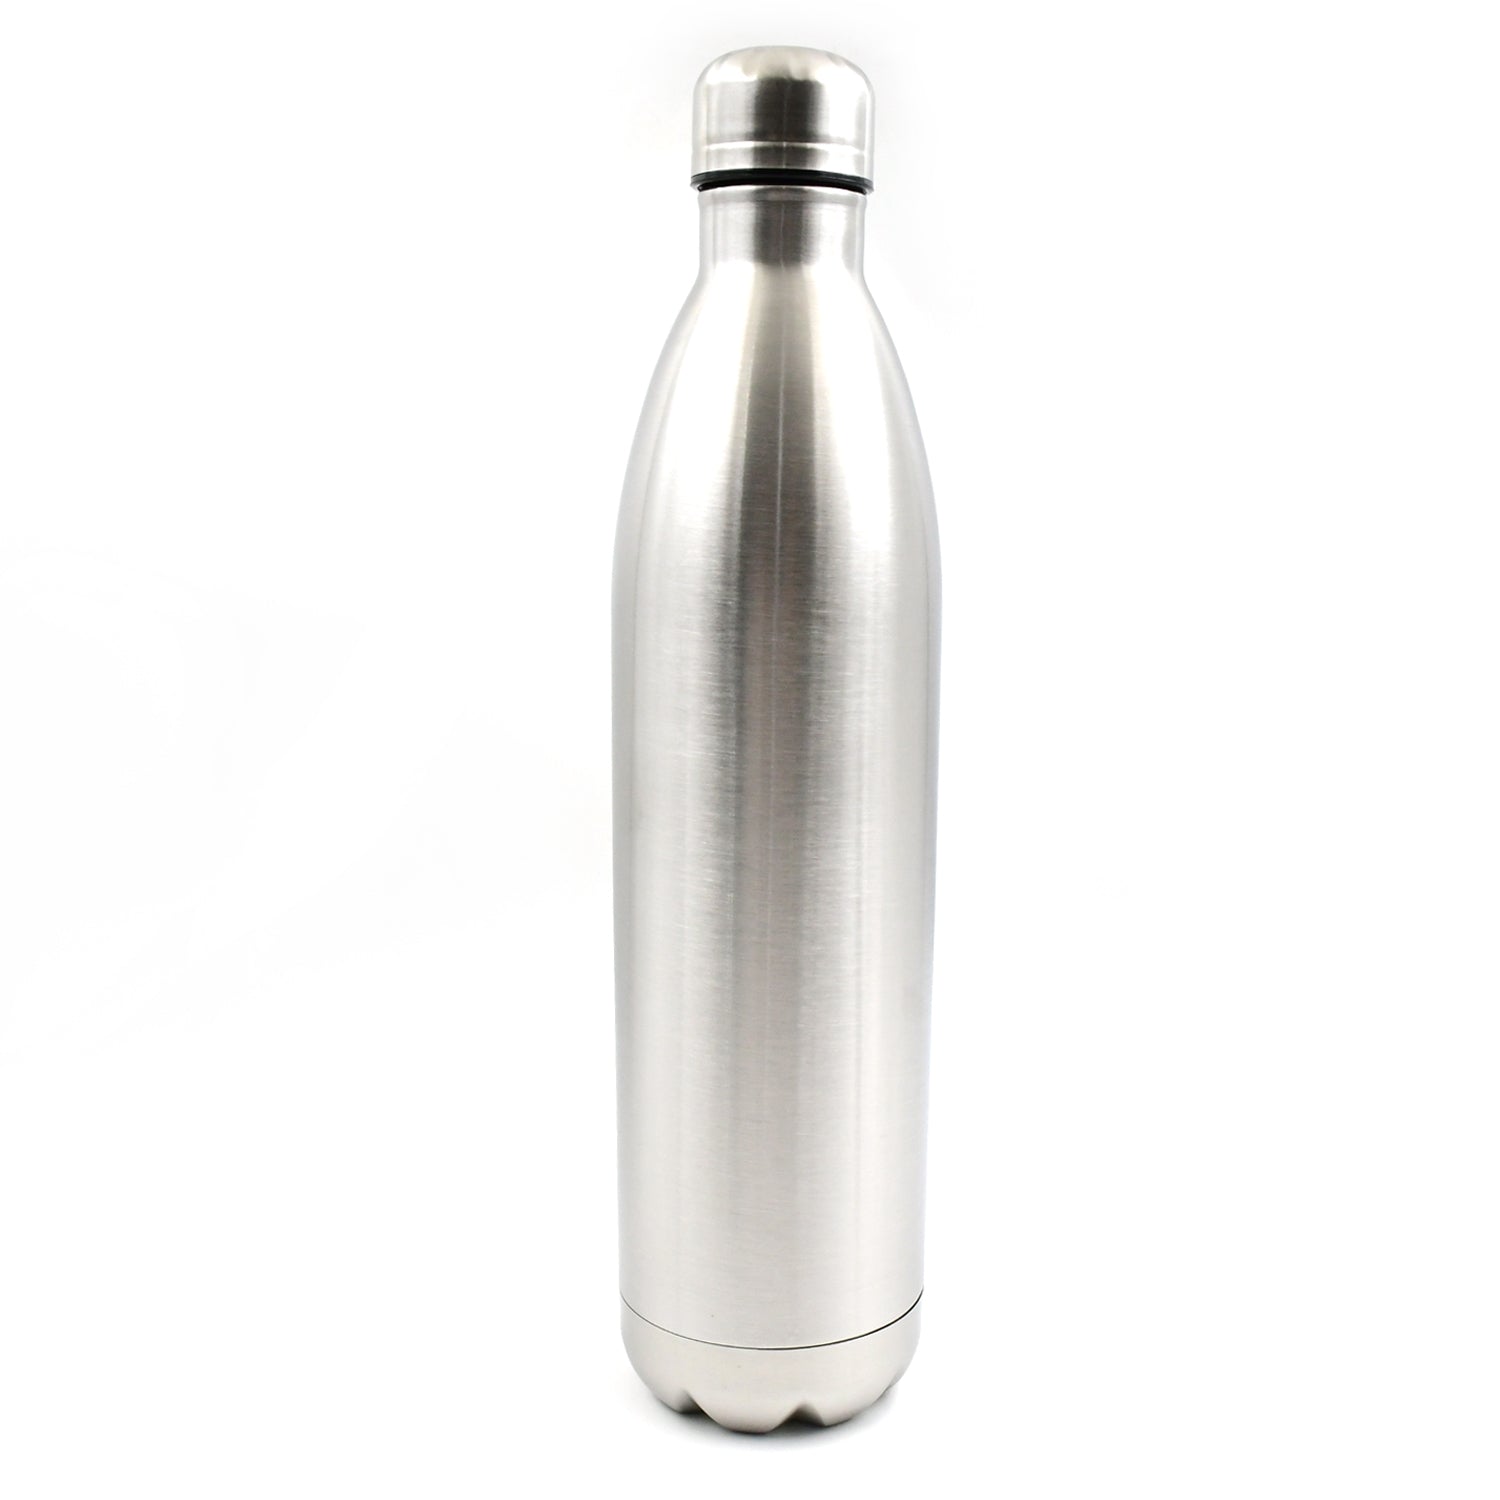 12860 Vacuum Stainless Steel Double Wall Water Bottle, Fridge Water Bottle, Leak Proof, Rust Proof, Cold & Hot Thermos steel Bottle| Leak Proof | Office Bottle | Gym | Home | Kitchen | Hiking | Trekking | Travel Bottle (1000 ML)